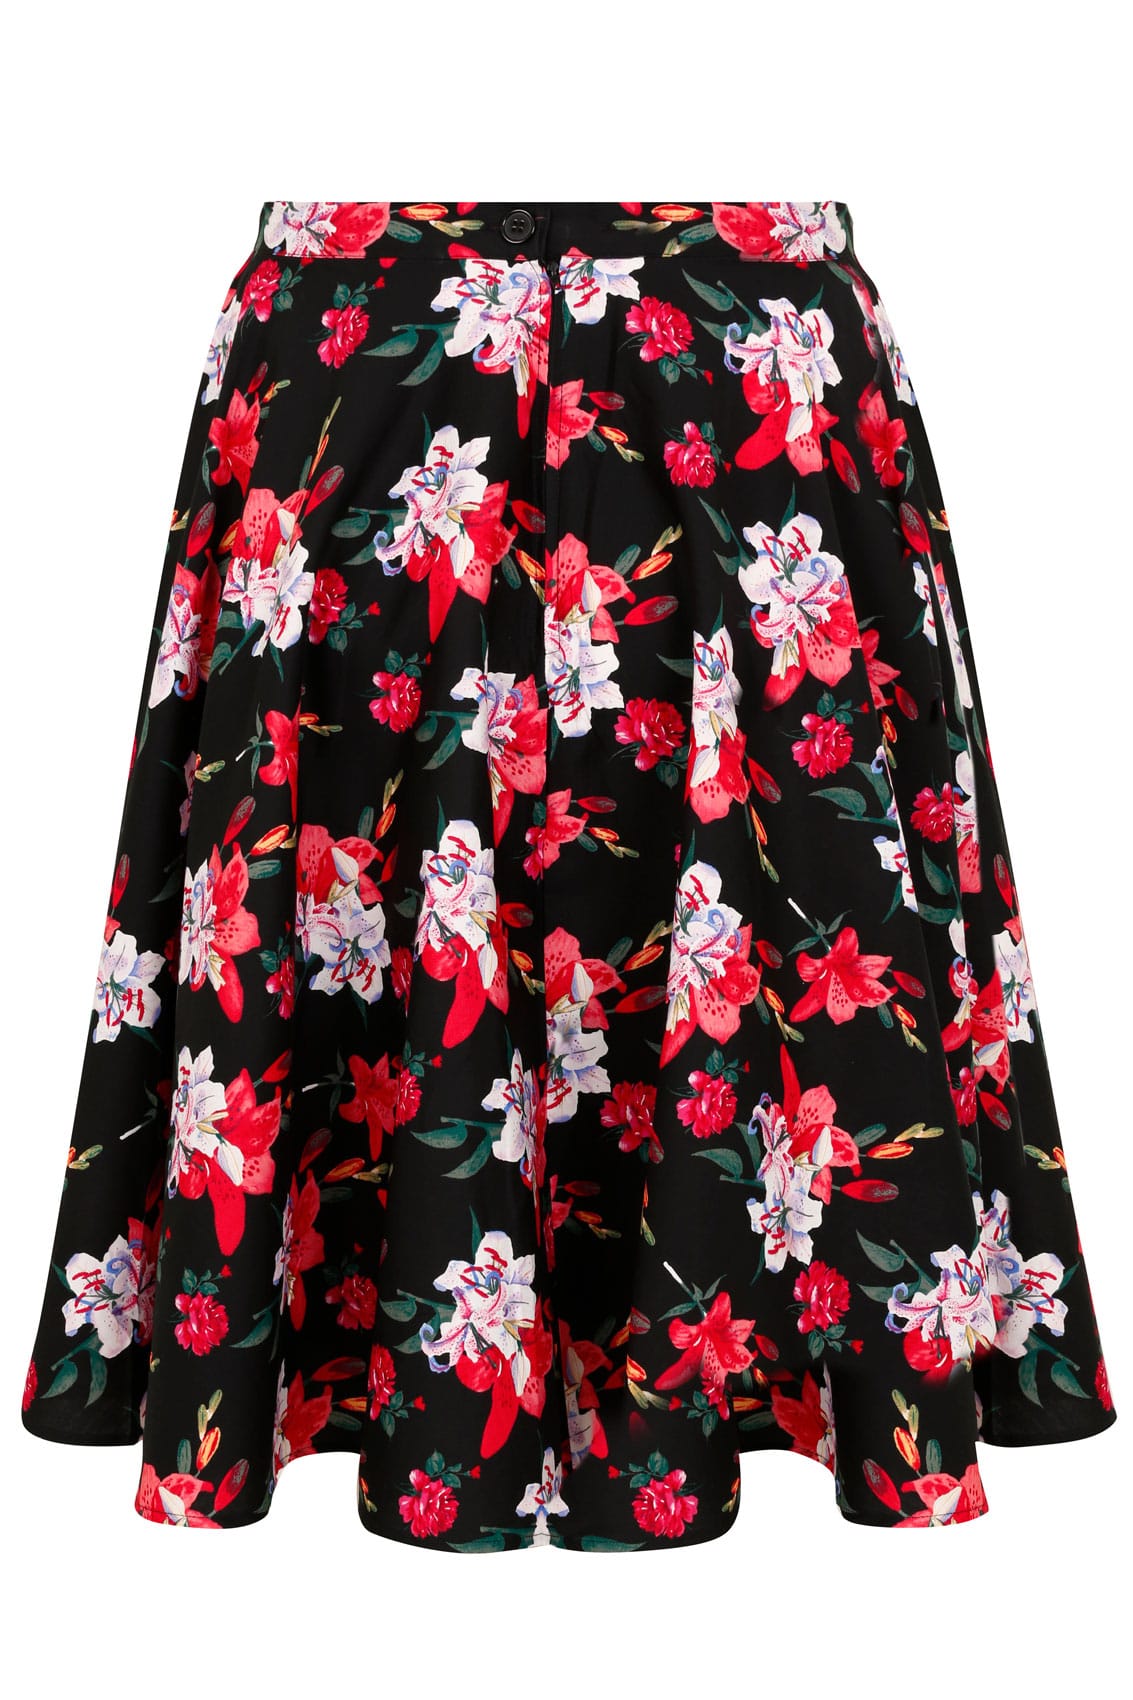 HELL BUNNY Black & Multi Bright Floral Print Liliana Skirt, Plus size ...